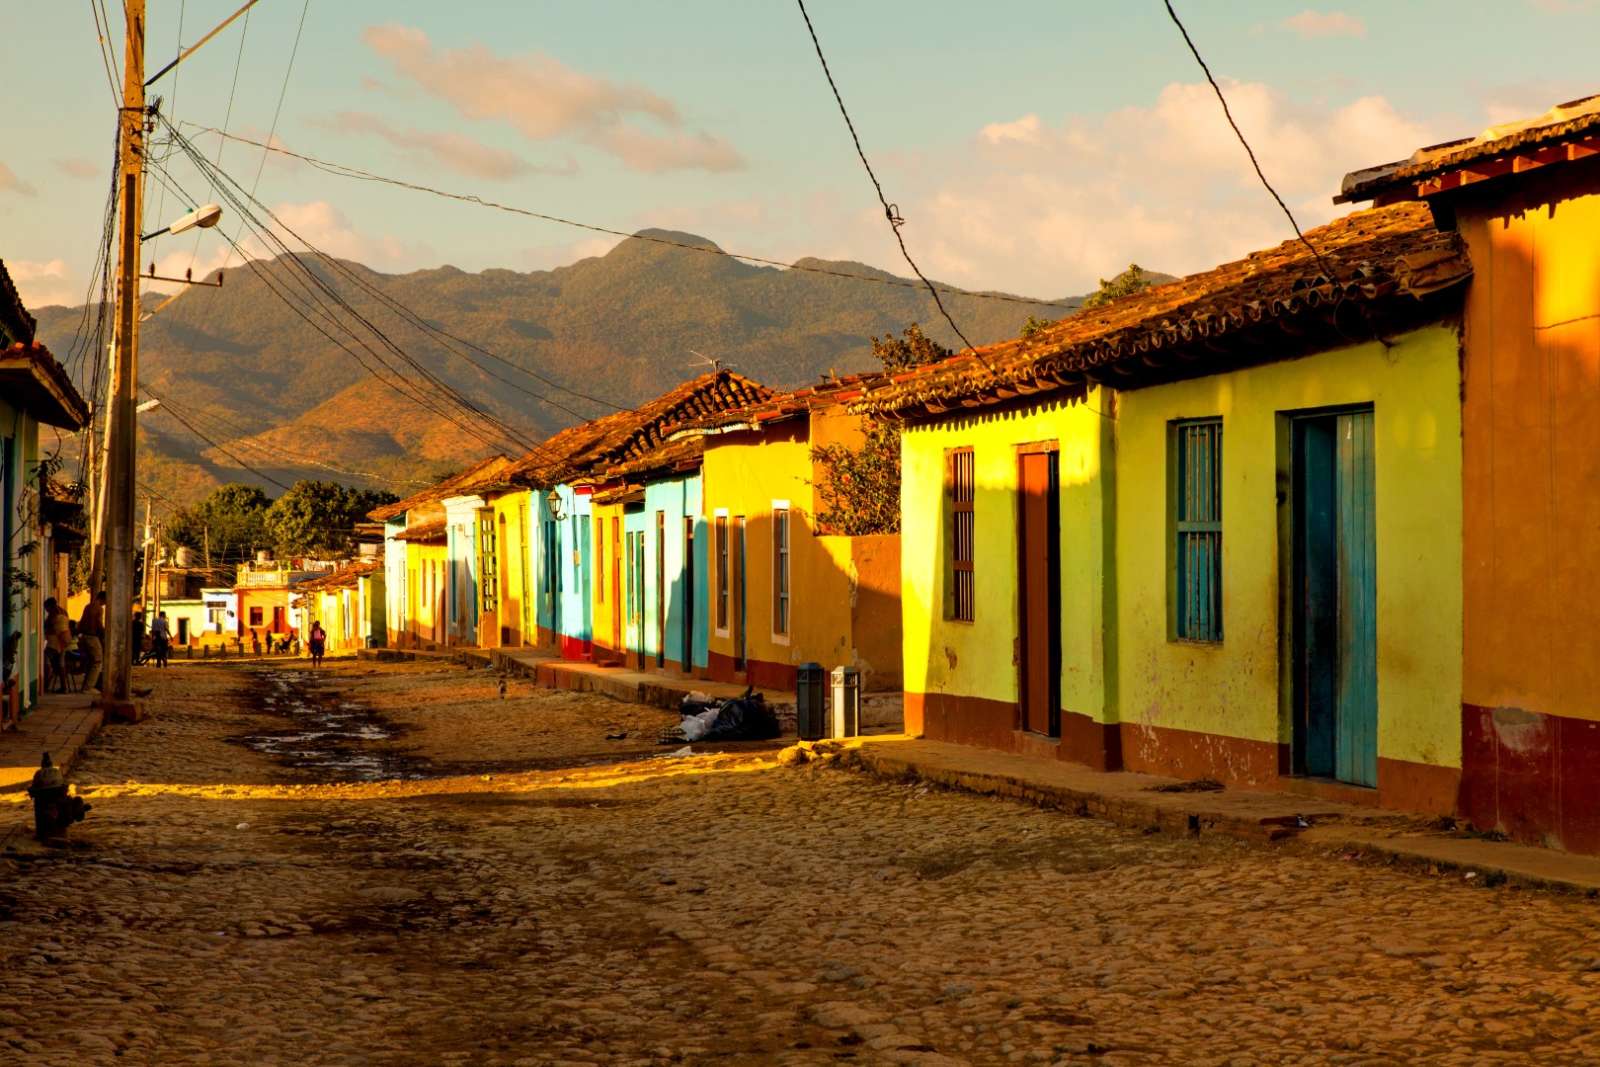 Colourful street scene in Trinidad, Cuba